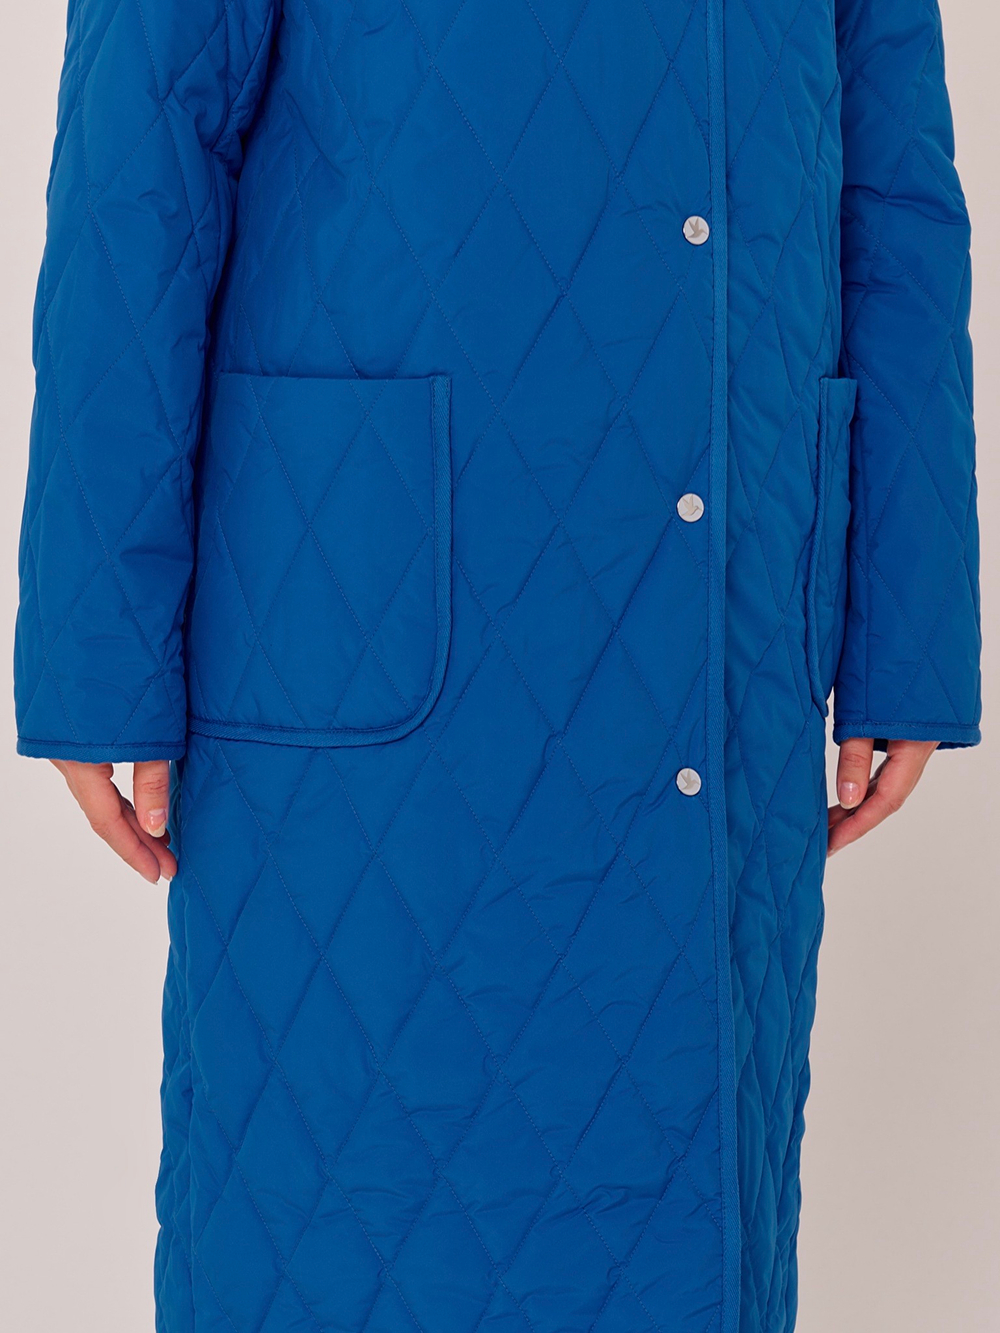 355.S24.055 пальто женское GALACTIC BLUE